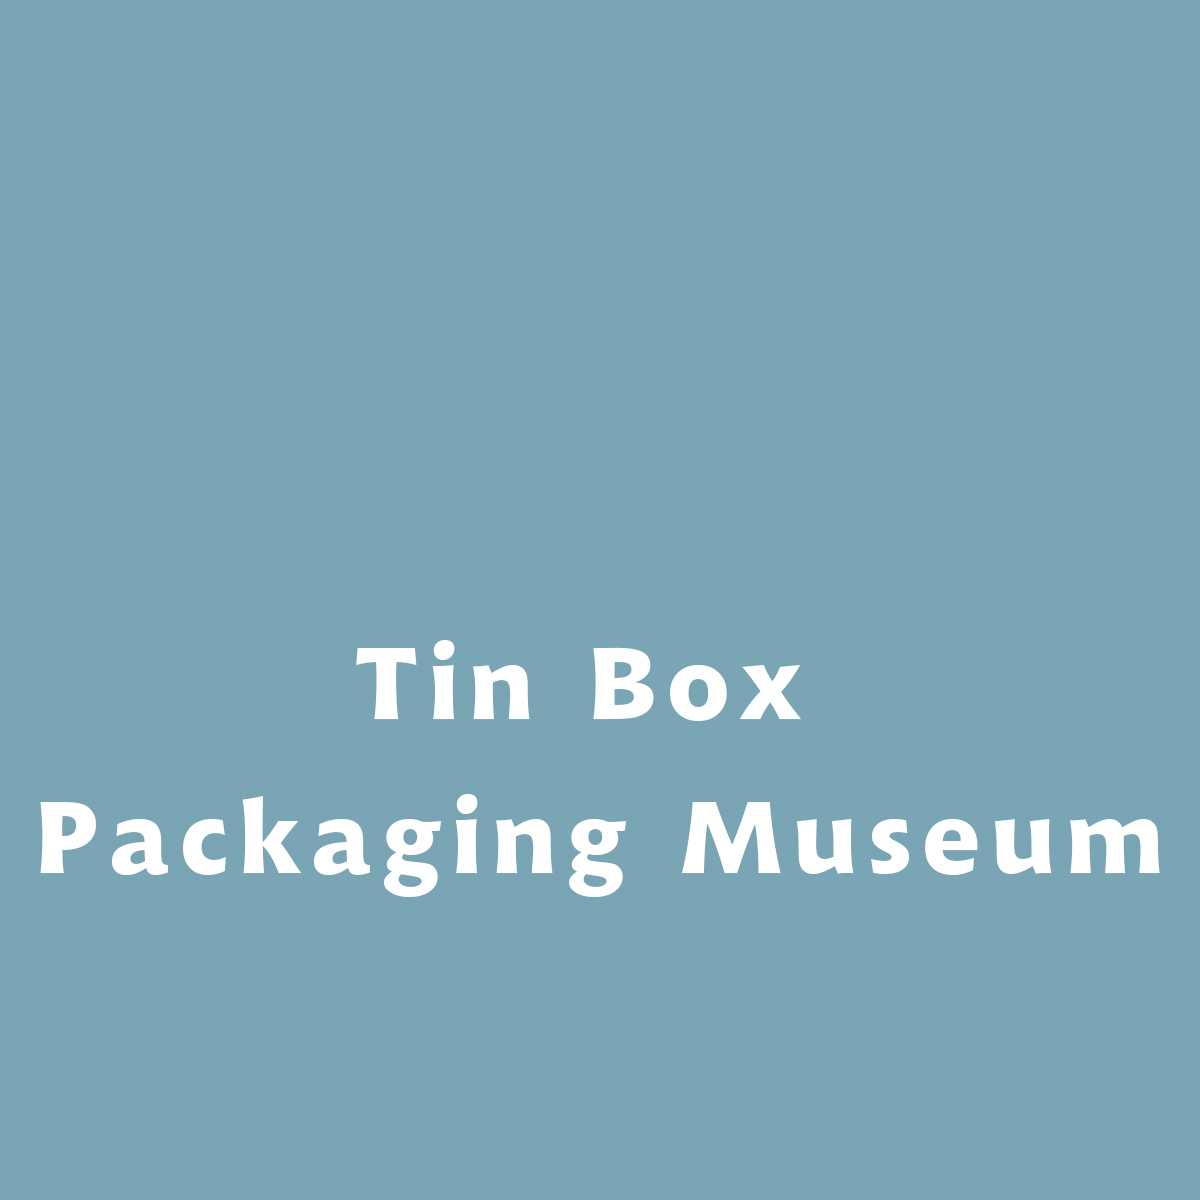 Tin Box Packaging Museum